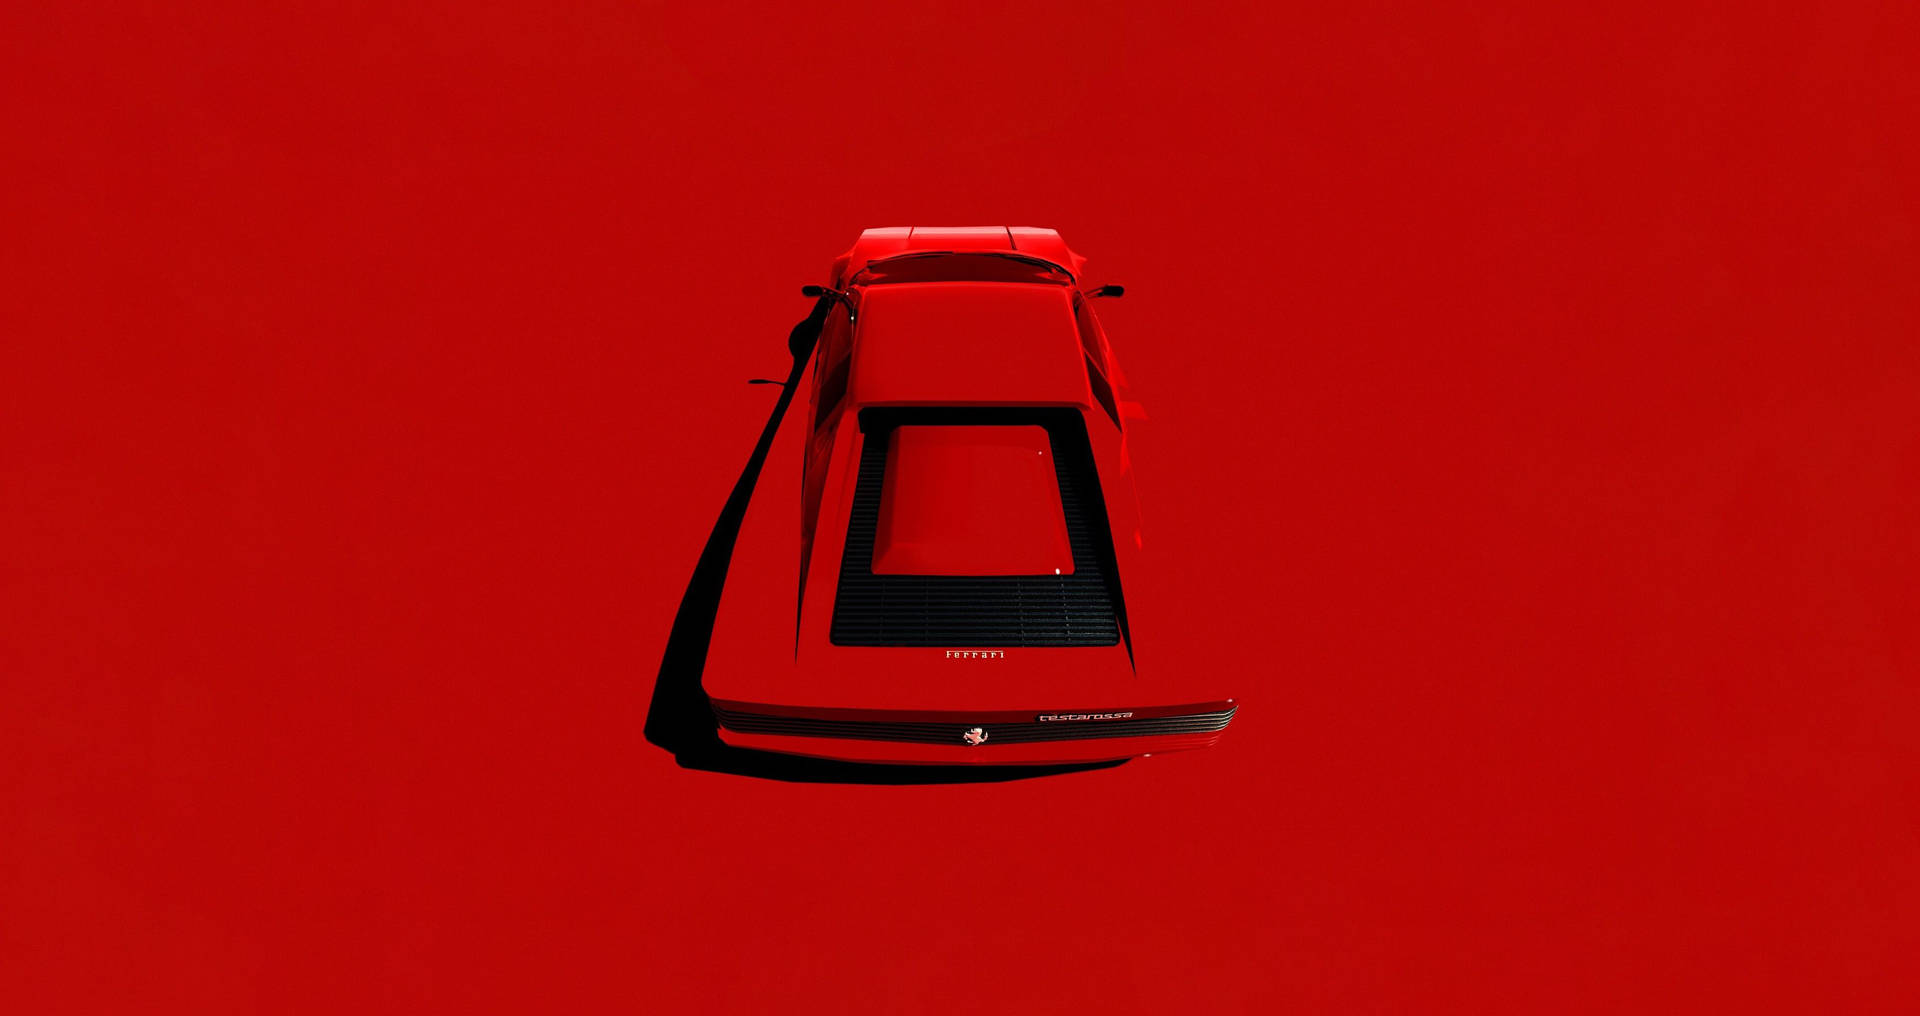 4k Minimalist Red Car Background